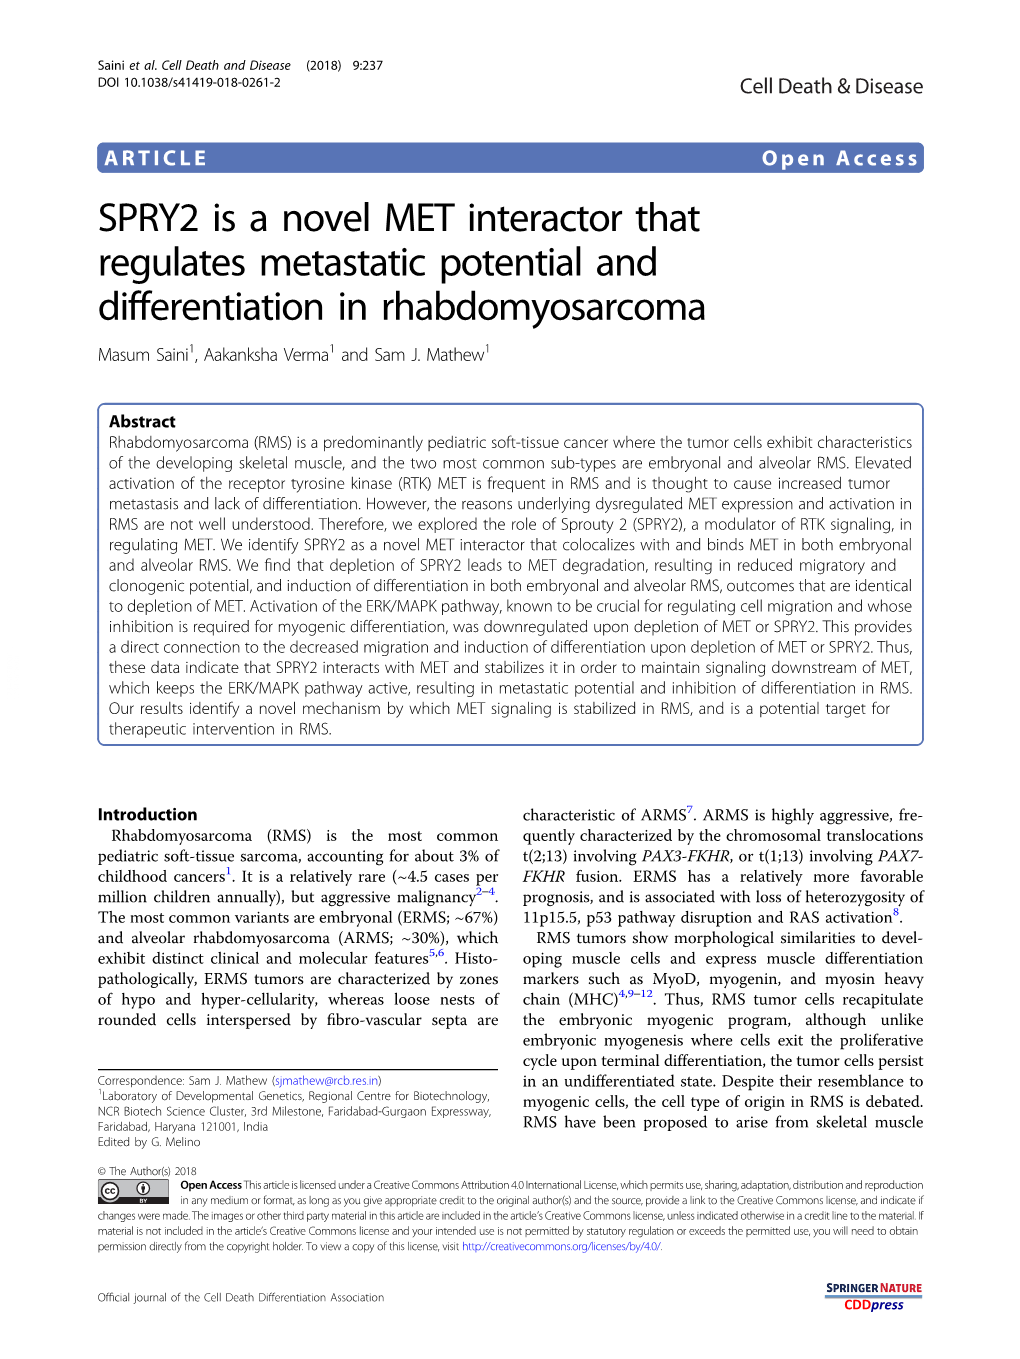 SPRY2 Is a Novel MET Interactor That Regulates Metastatic Potential and Differentiation in Rhabdomyosarcoma Masum Saini1, Aakanksha Verma1 and Sam J